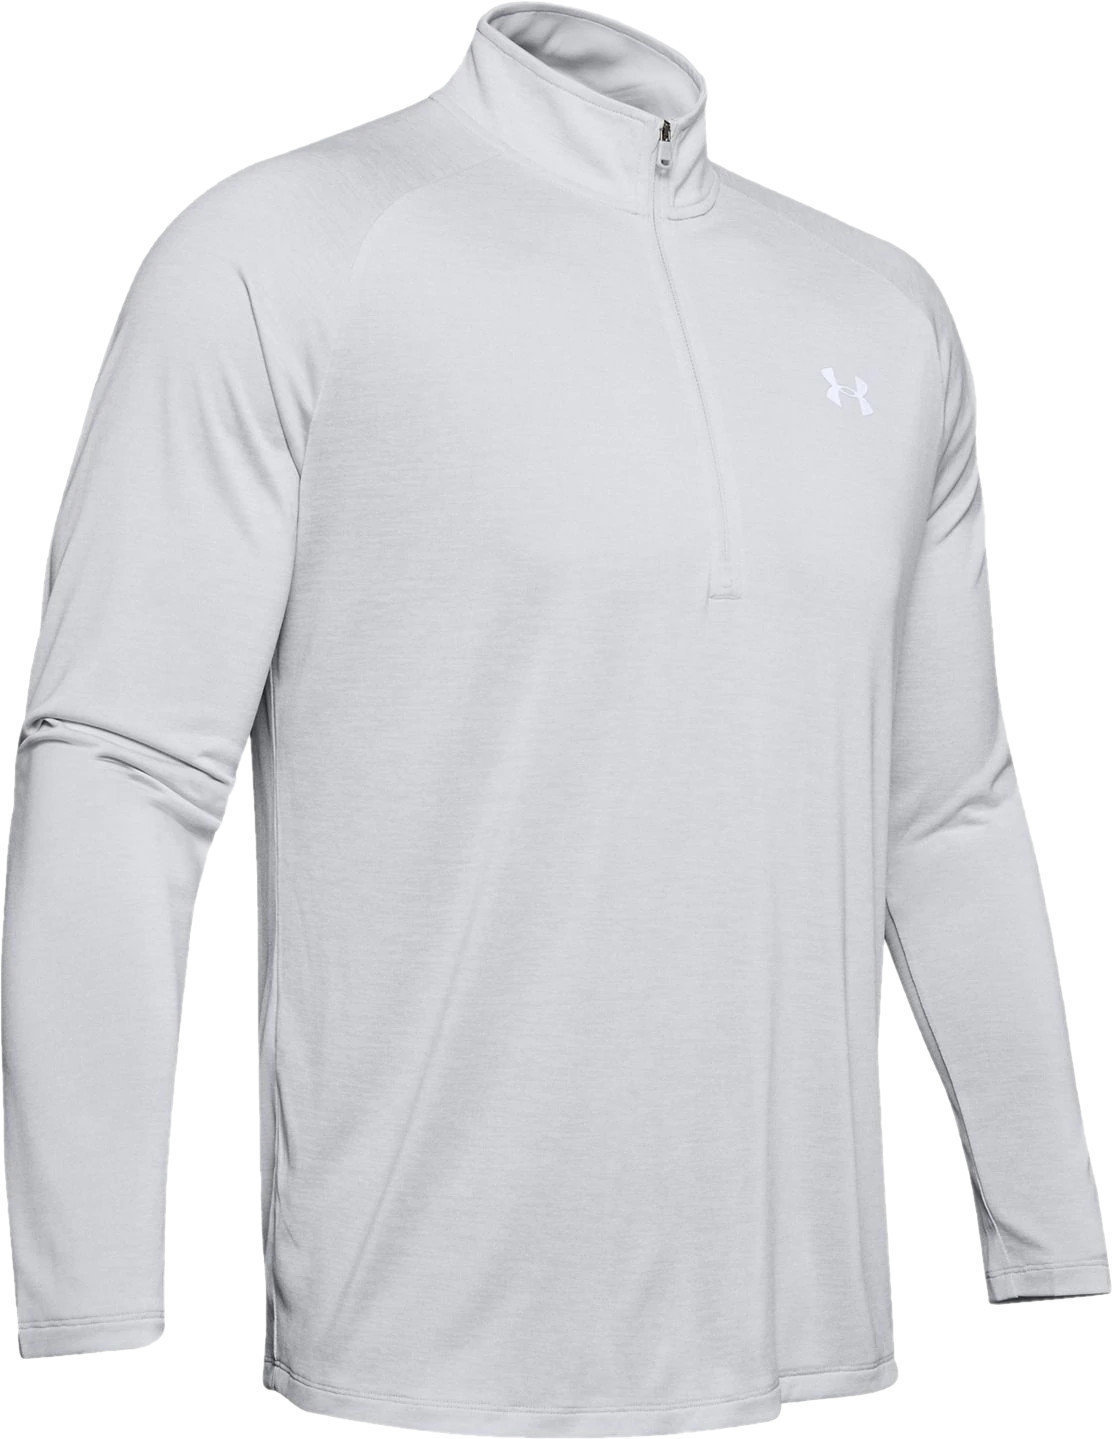 Hoodie/Sweater Under Armour Men's UA Tech 2.0 1/2 Zip Long Sleeve Halo Gray M